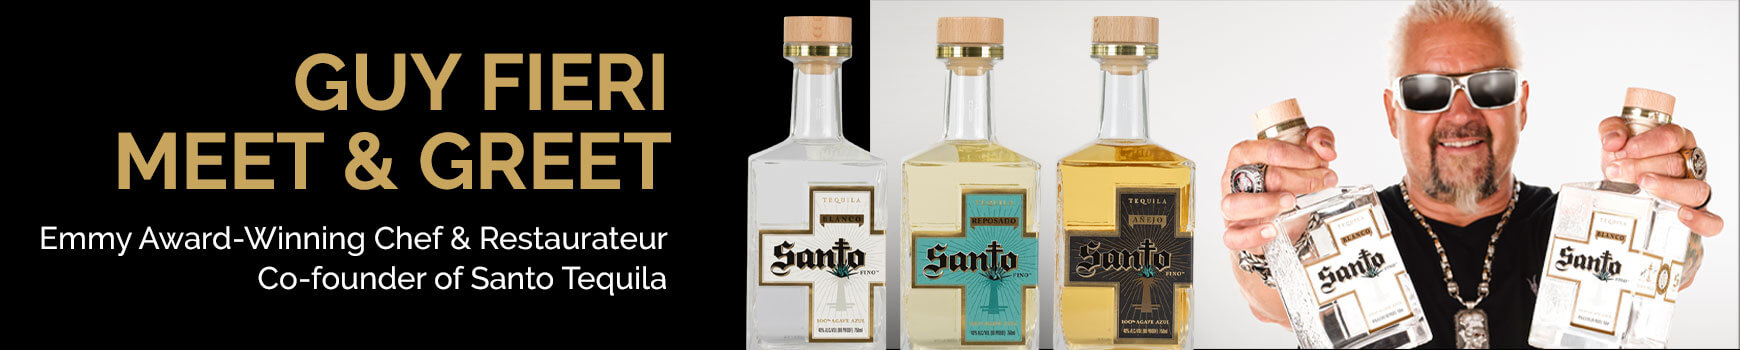 Guy Fieri Meet & Greet. Emmy Award-Winning Chef & Restauranteur Co-founder of Santo Tequila